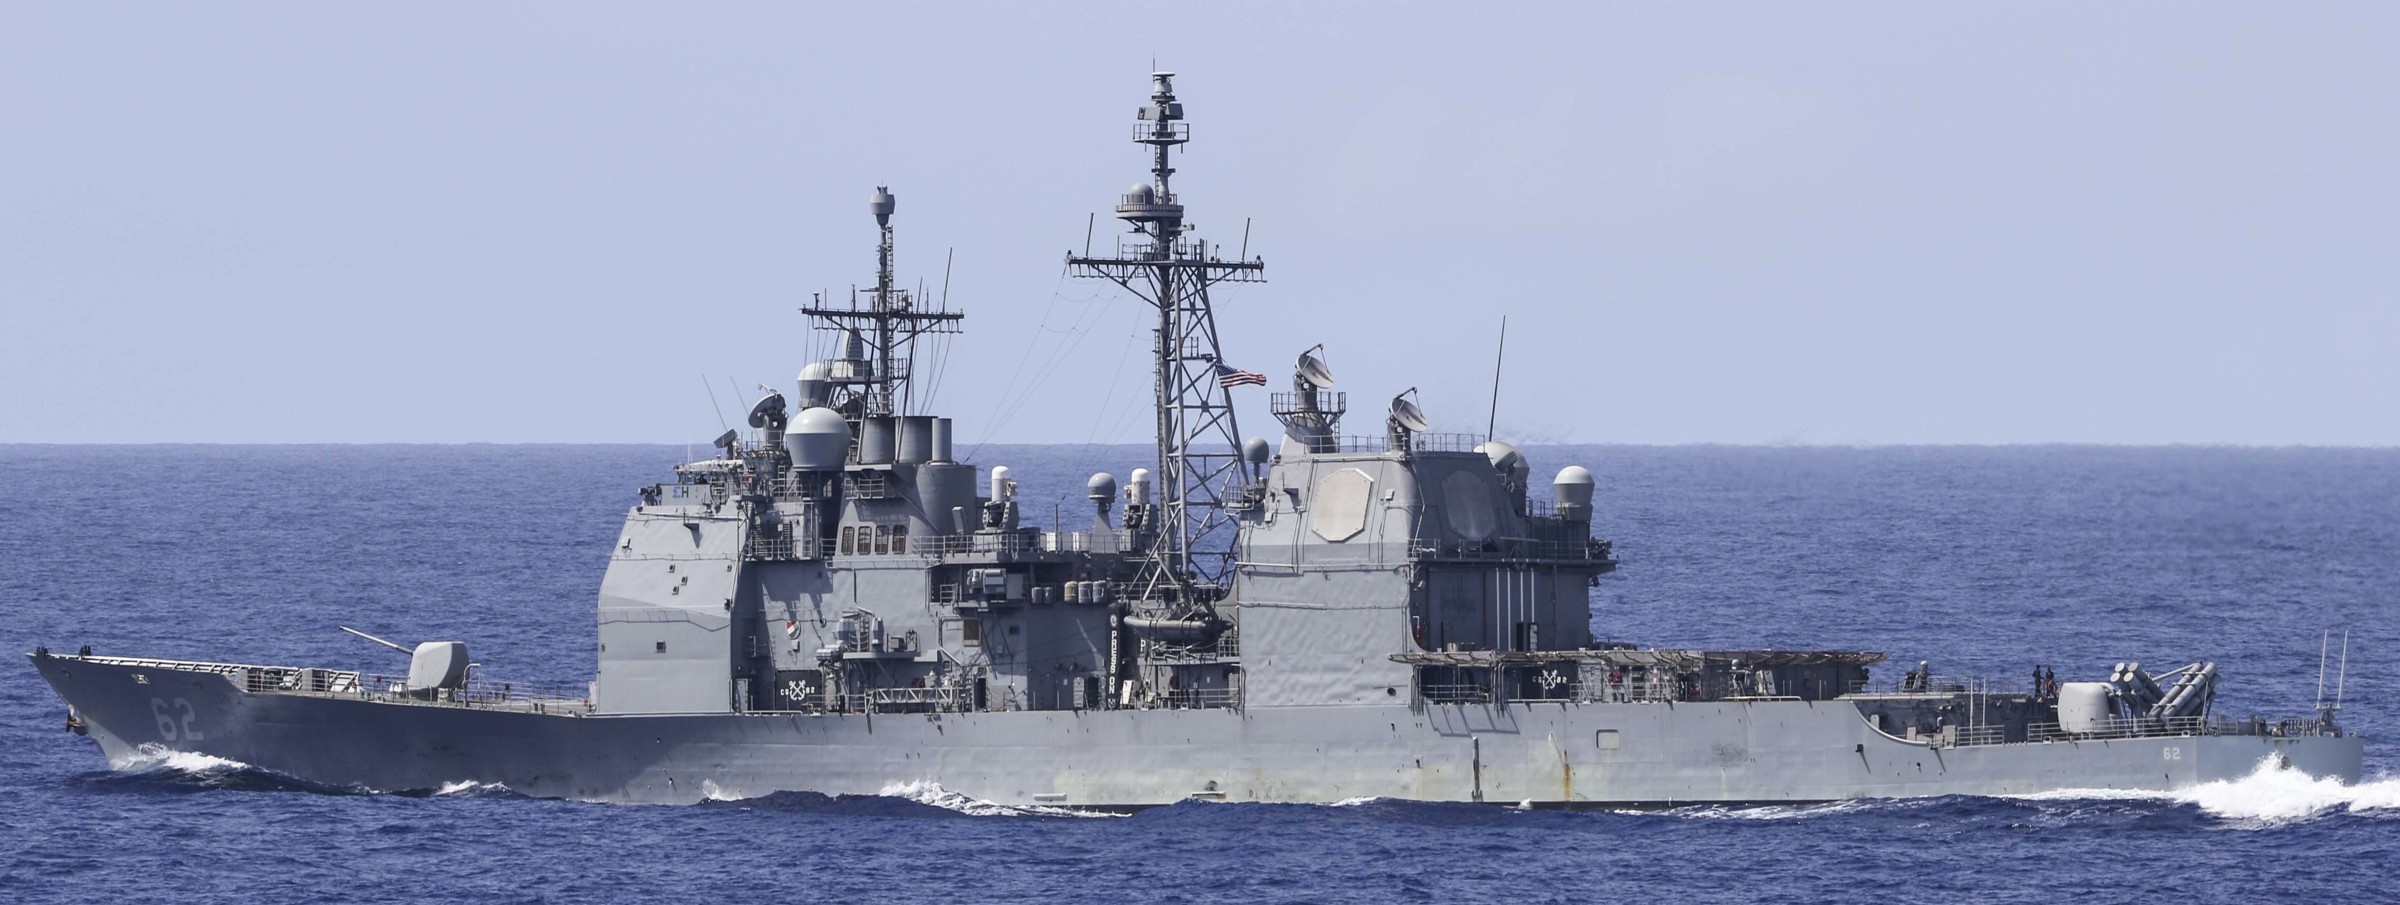 cg-62 uss chancellorsville ticonderoga class guided missile cruiser aegis us navy 93